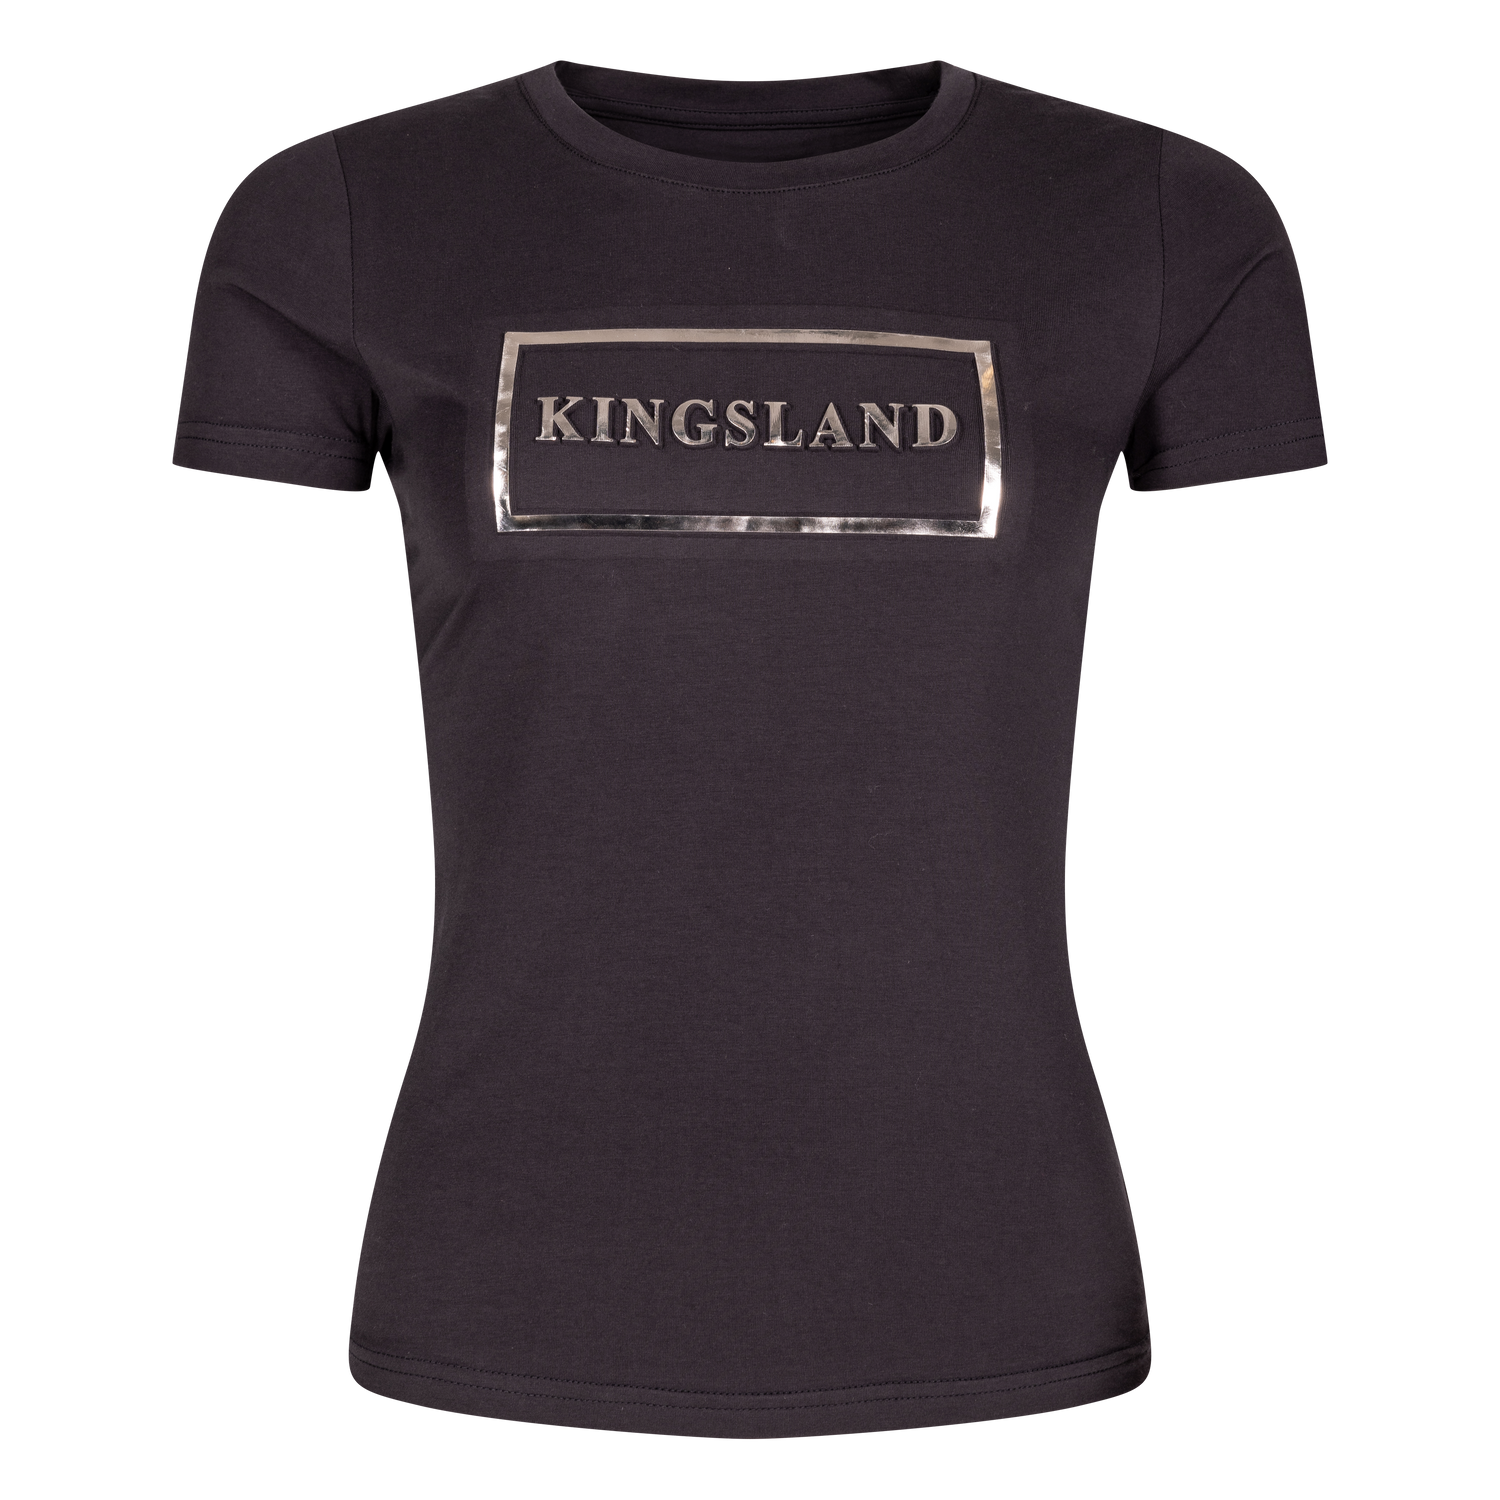 Kingsland ladies t-shirt